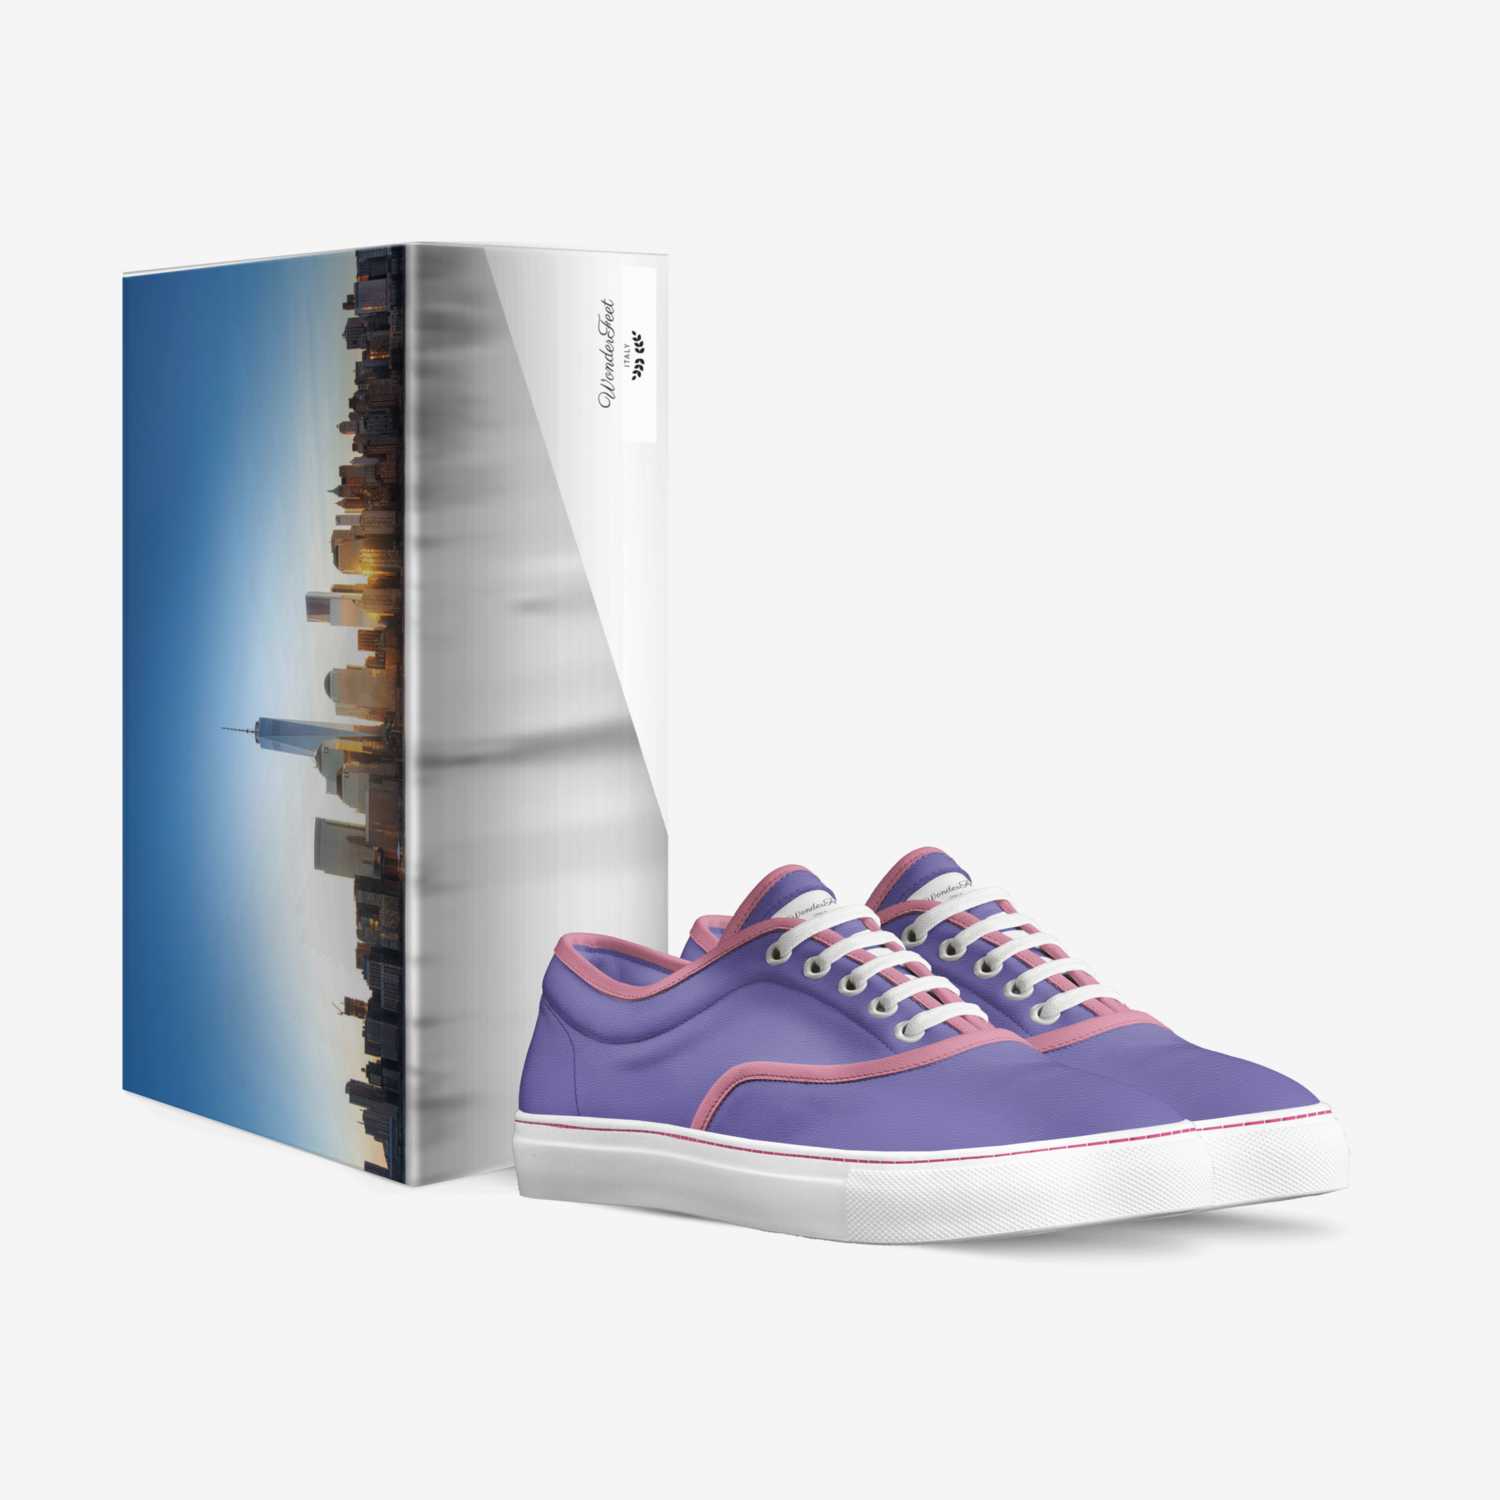 WonderFeet custom made in Italy shoes by Makayla | Box view